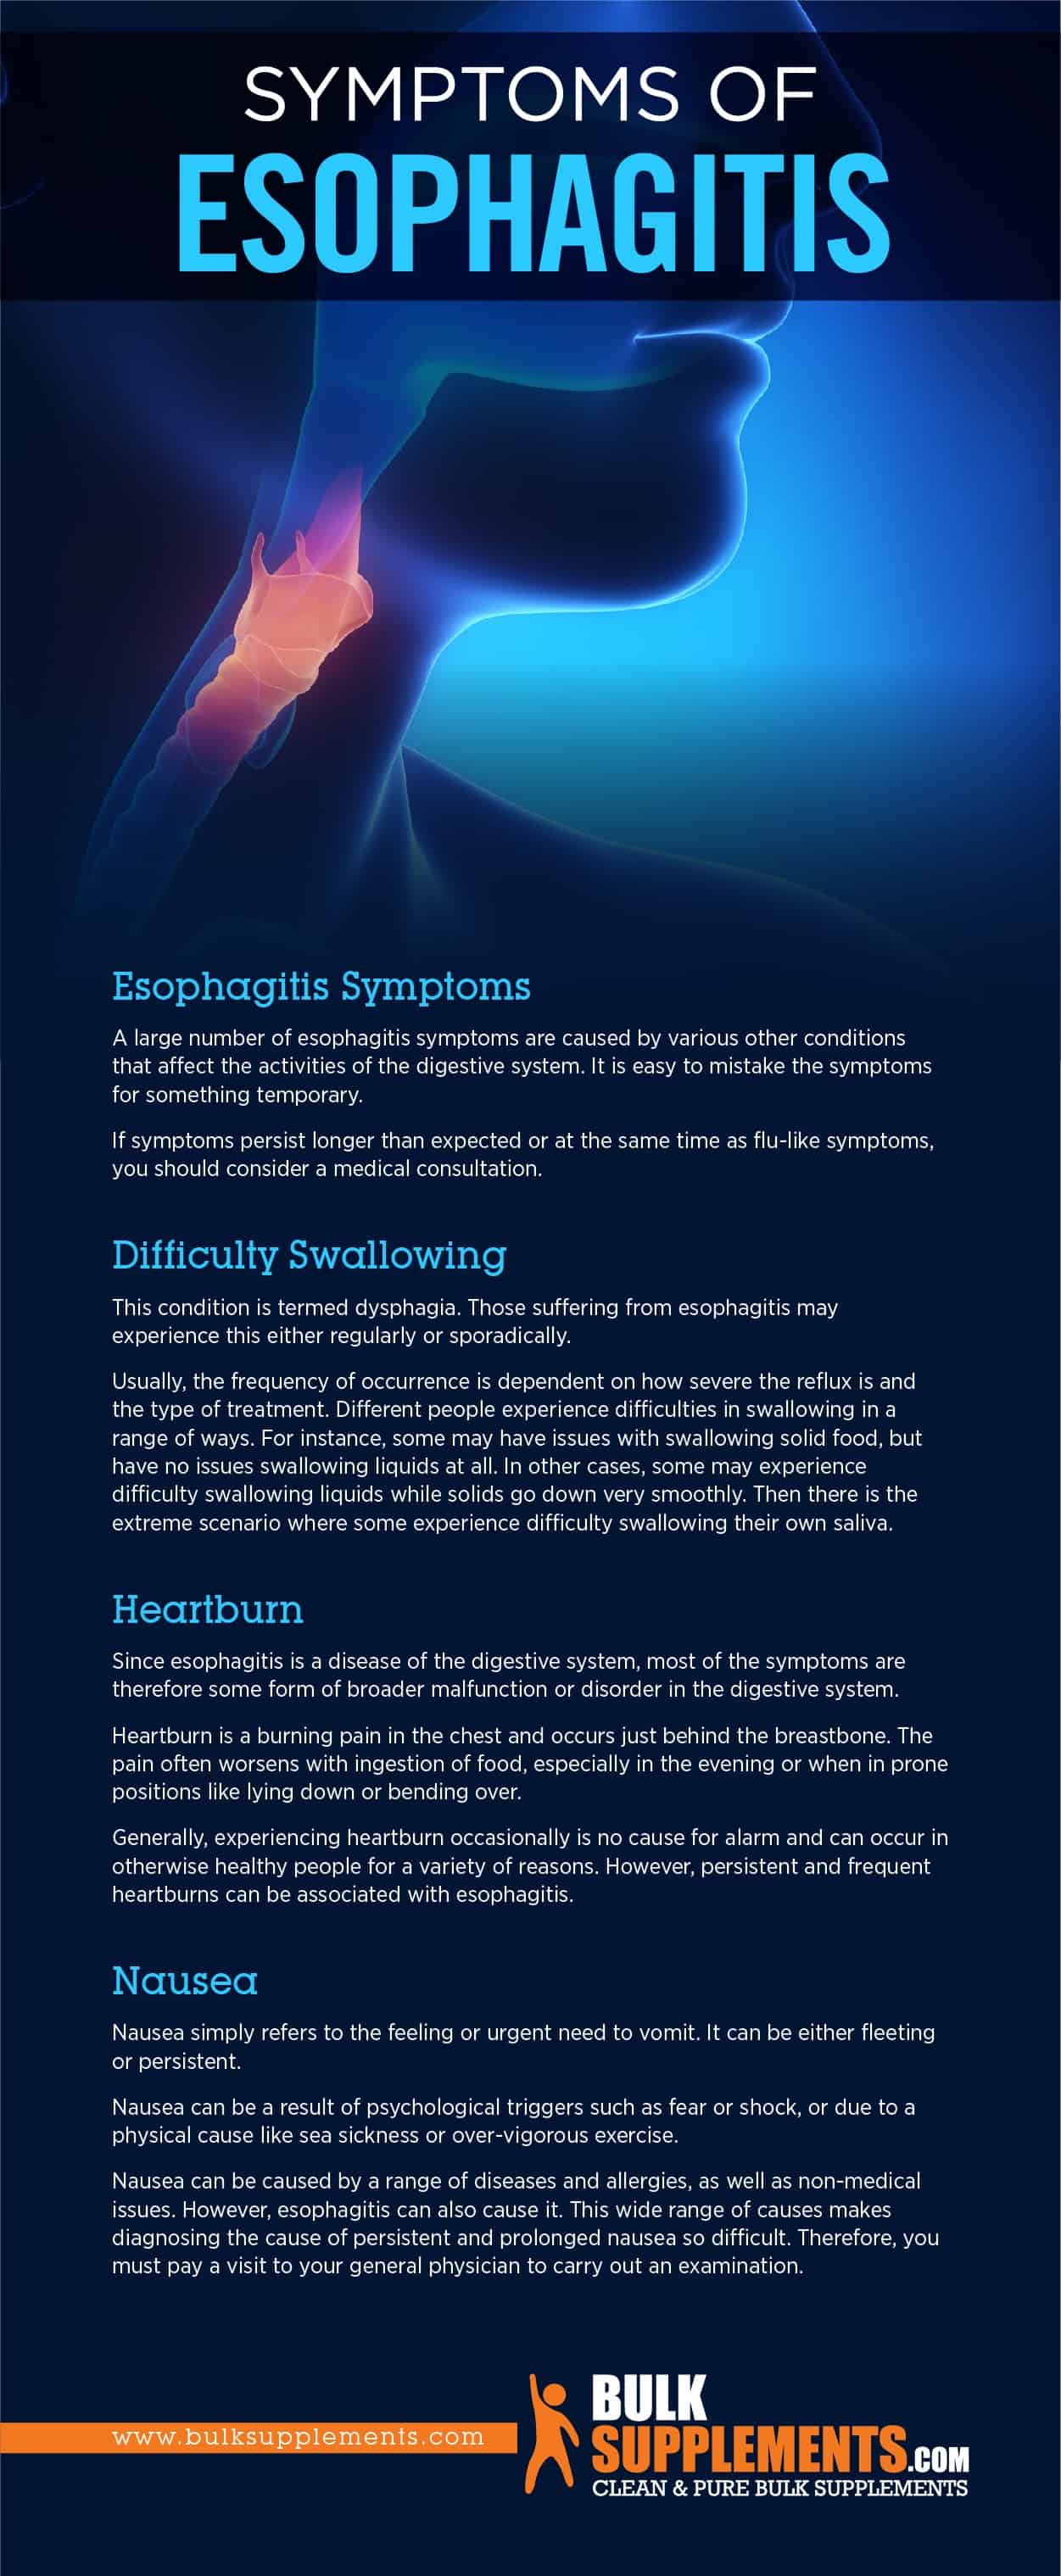 Symptoms of Esophagitis